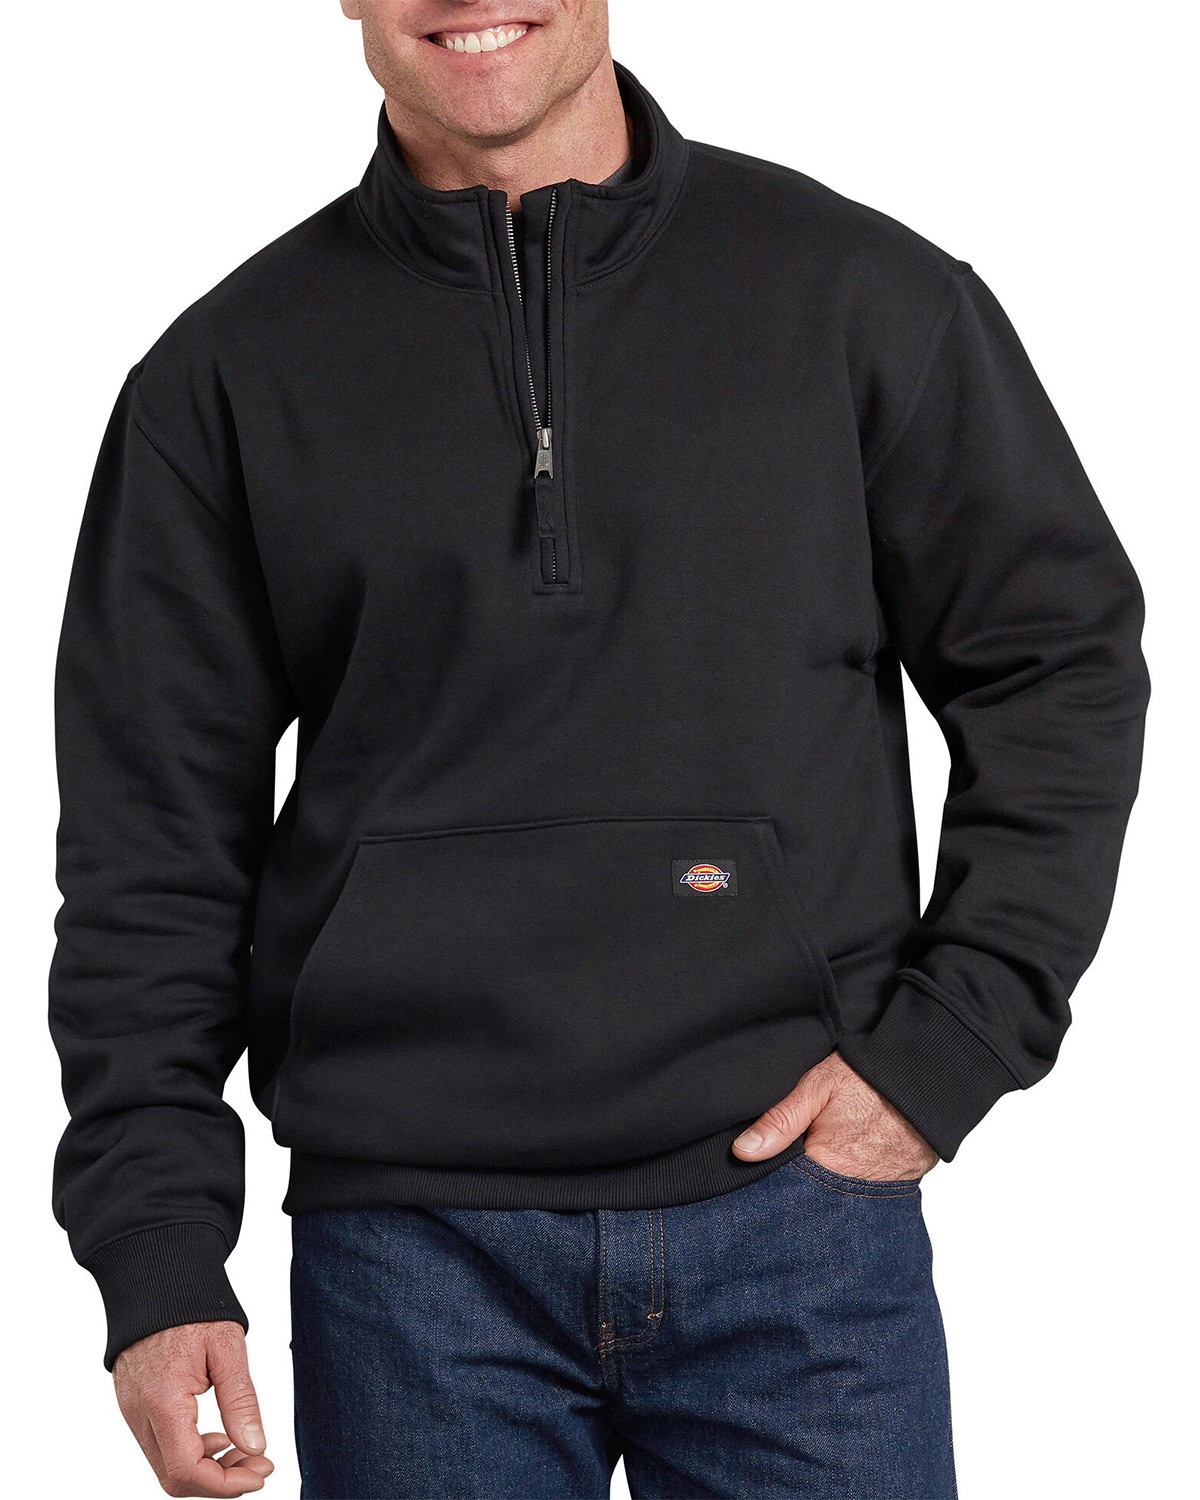 mens half zip pullover fleece with pockets